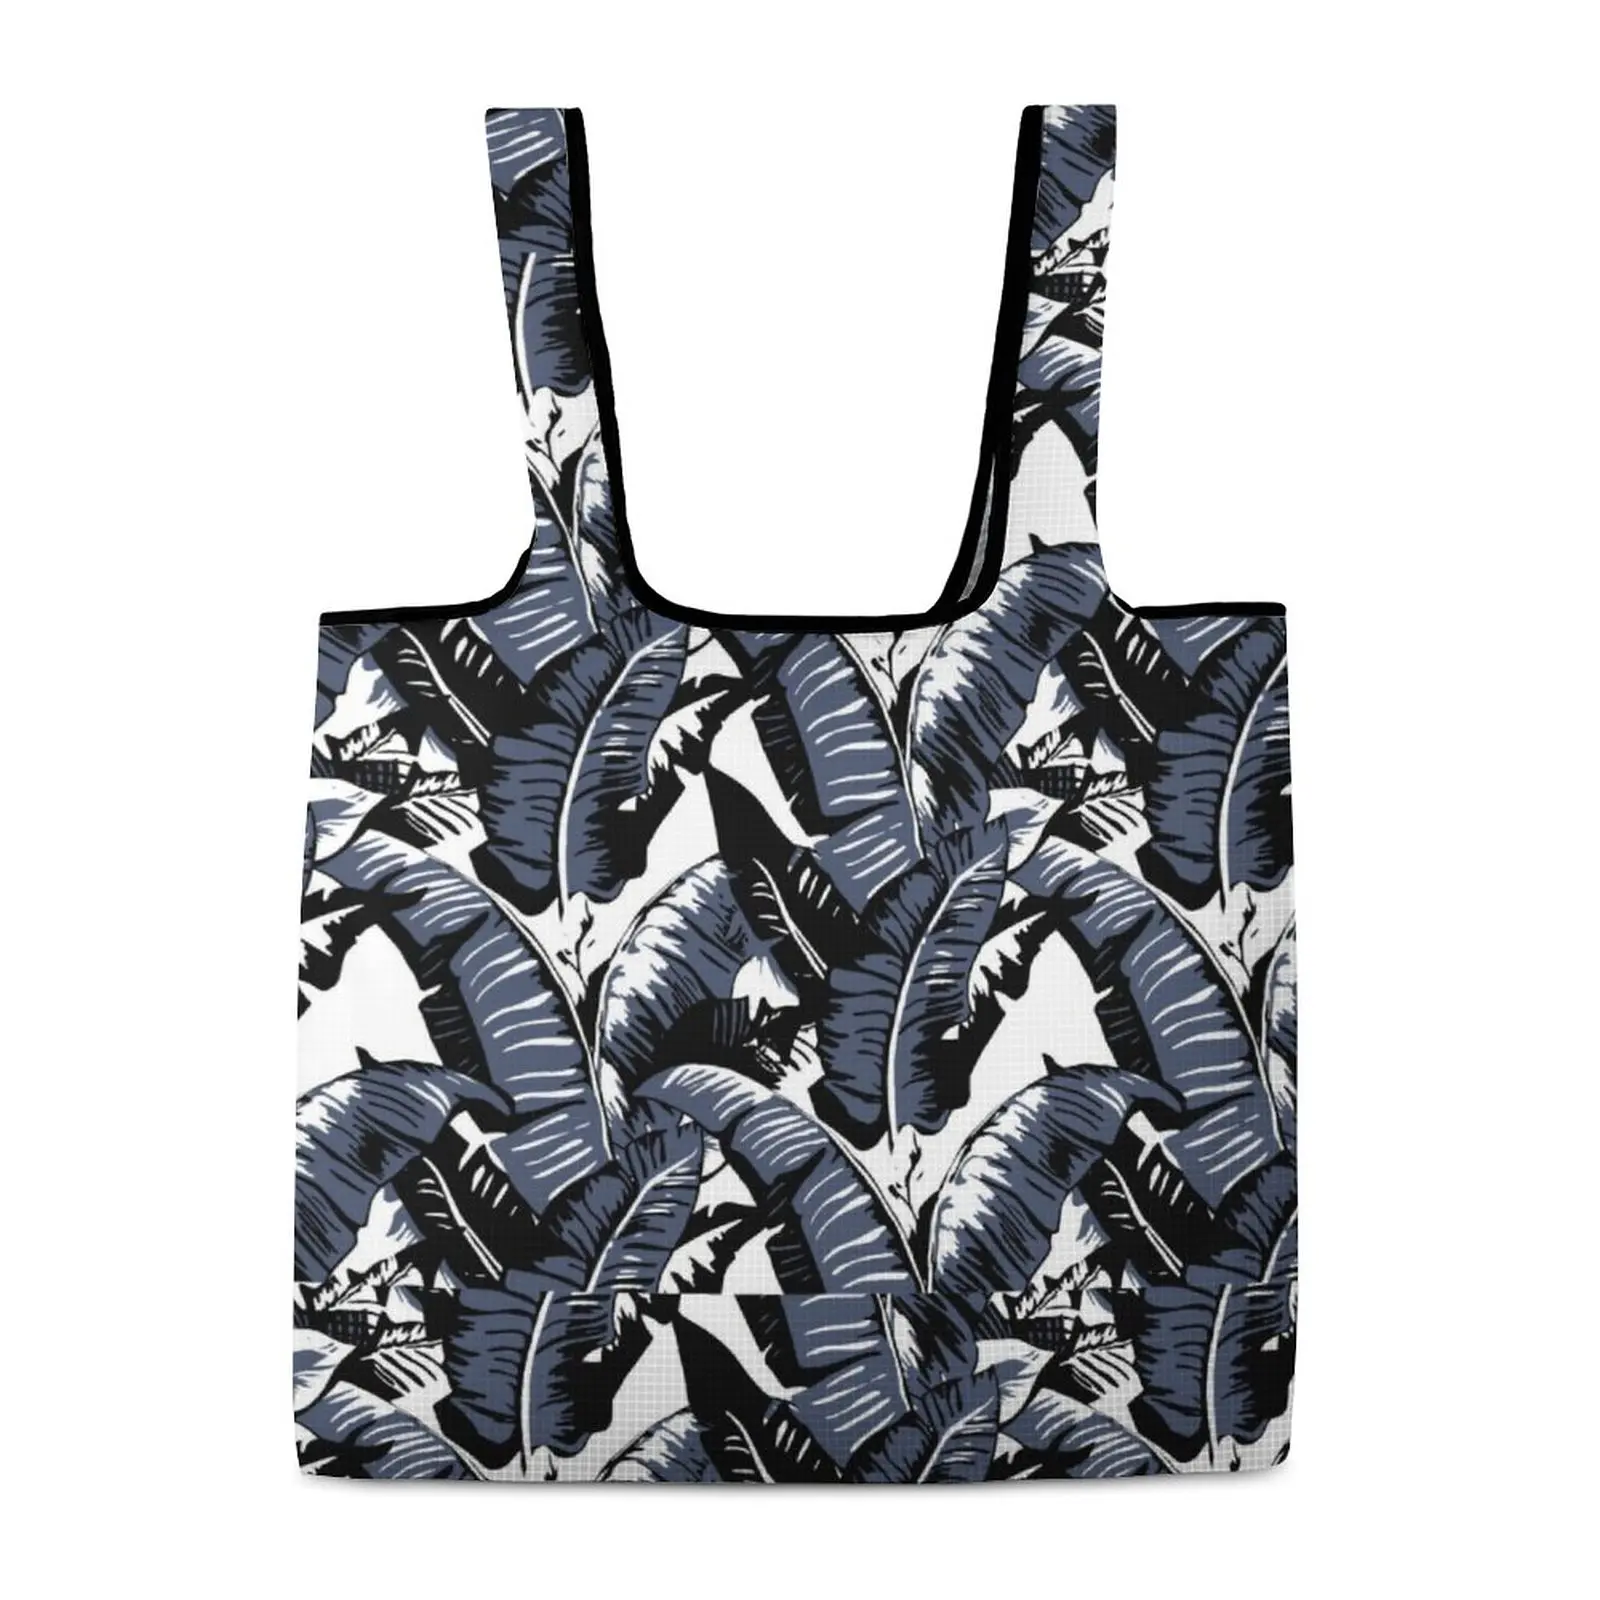 Customized Patterns Folding Shopping Tote Bag Black Totes Bag Zipperless Lightweight Bag Reusable Shopping Beach Bag